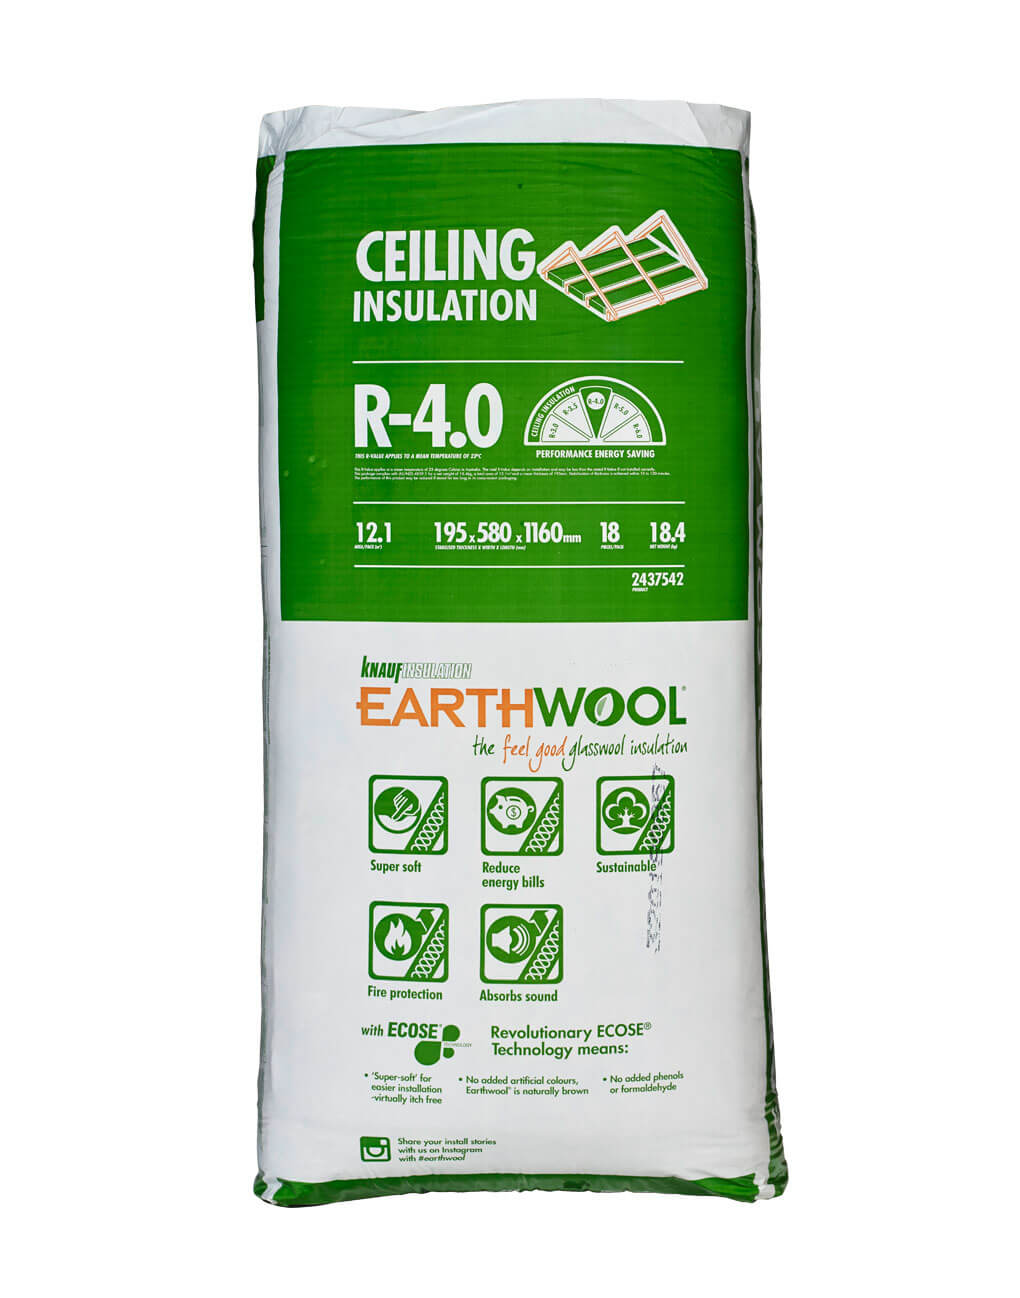 Buy R4.0 Knauf Earthwool Ceiling Insulation Batts